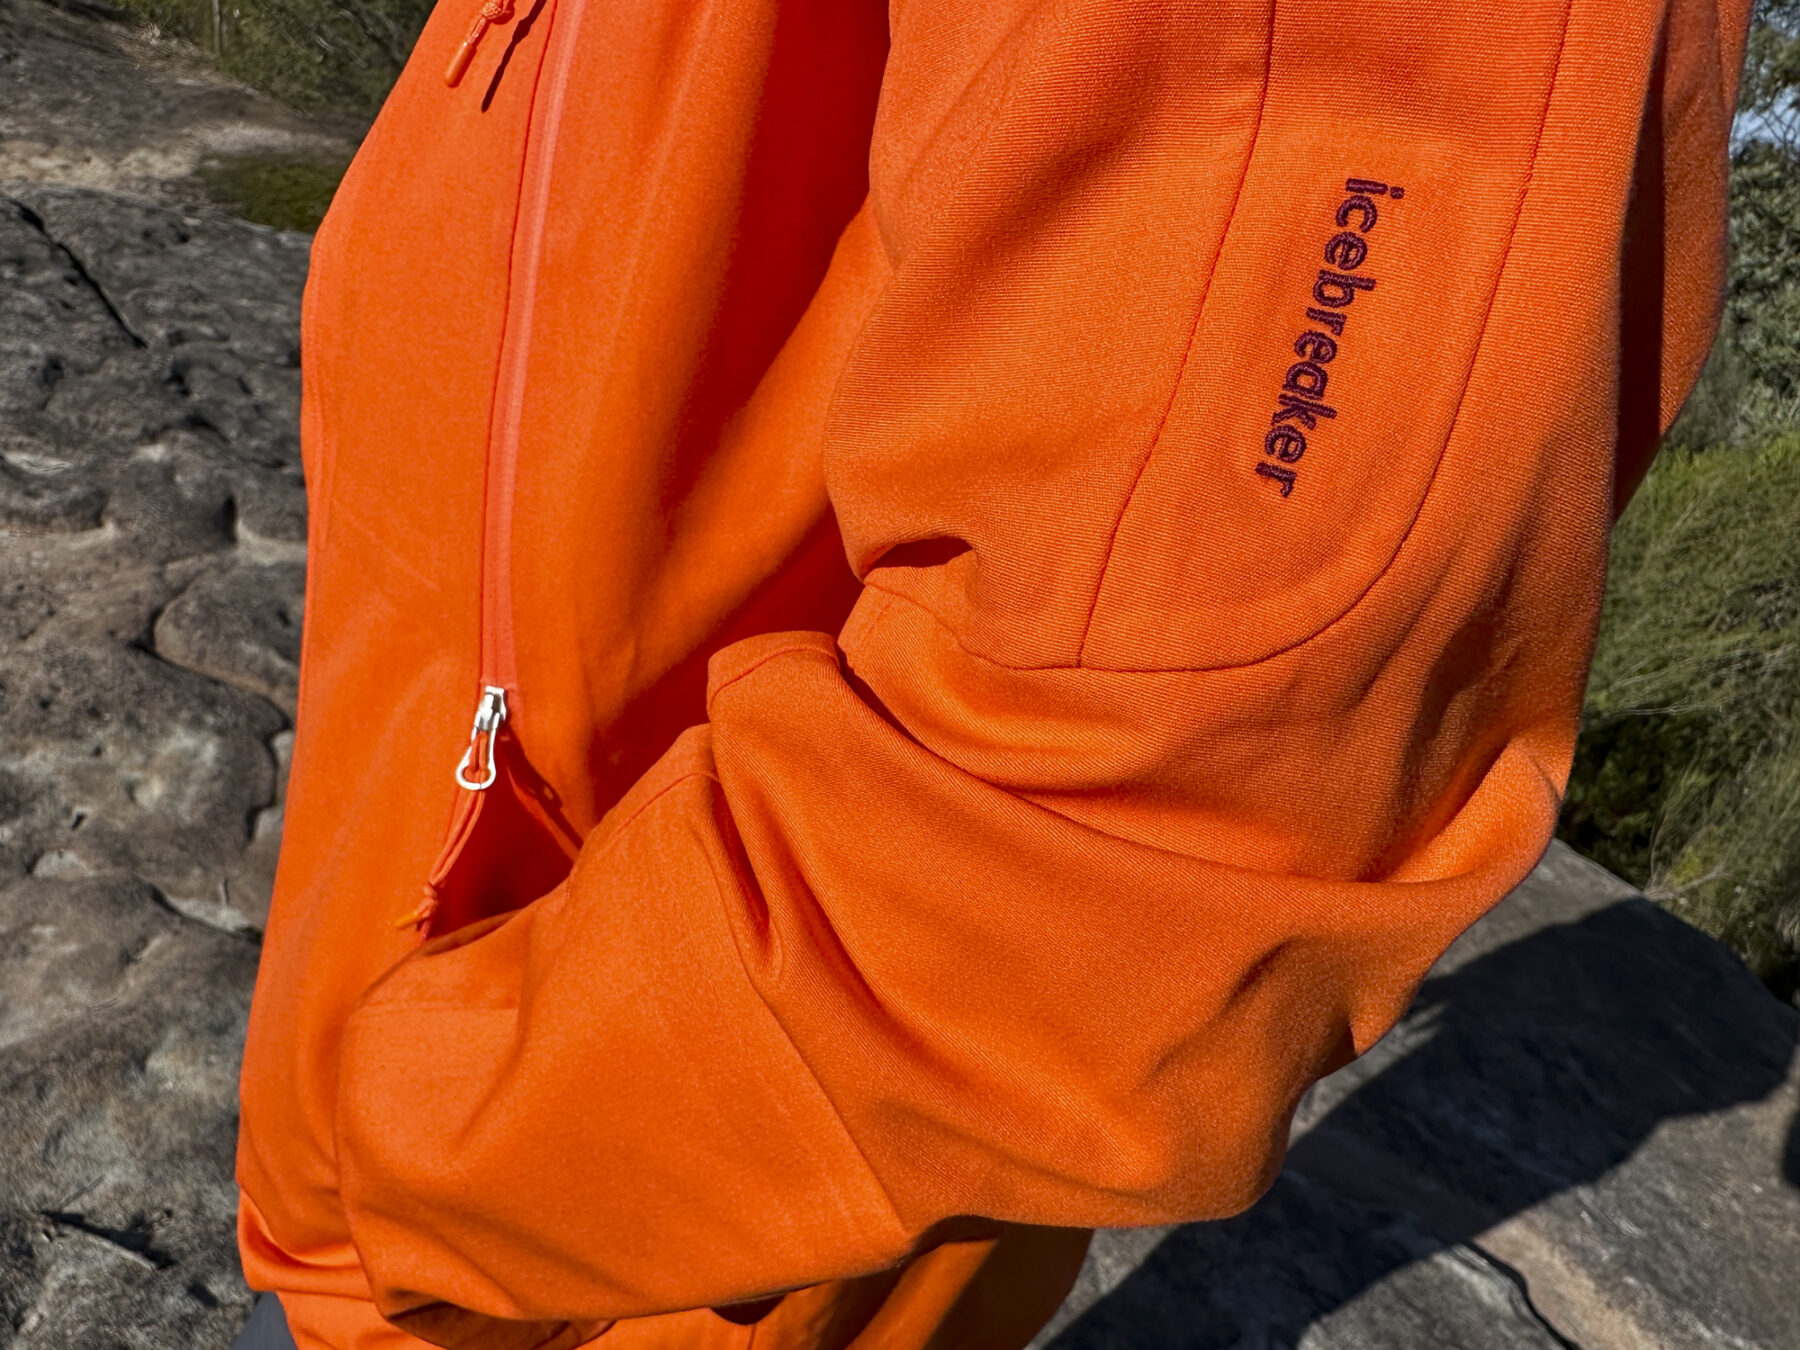 Icebreaker Shell+™ Merino Hooded Jacket and Pants: Tested